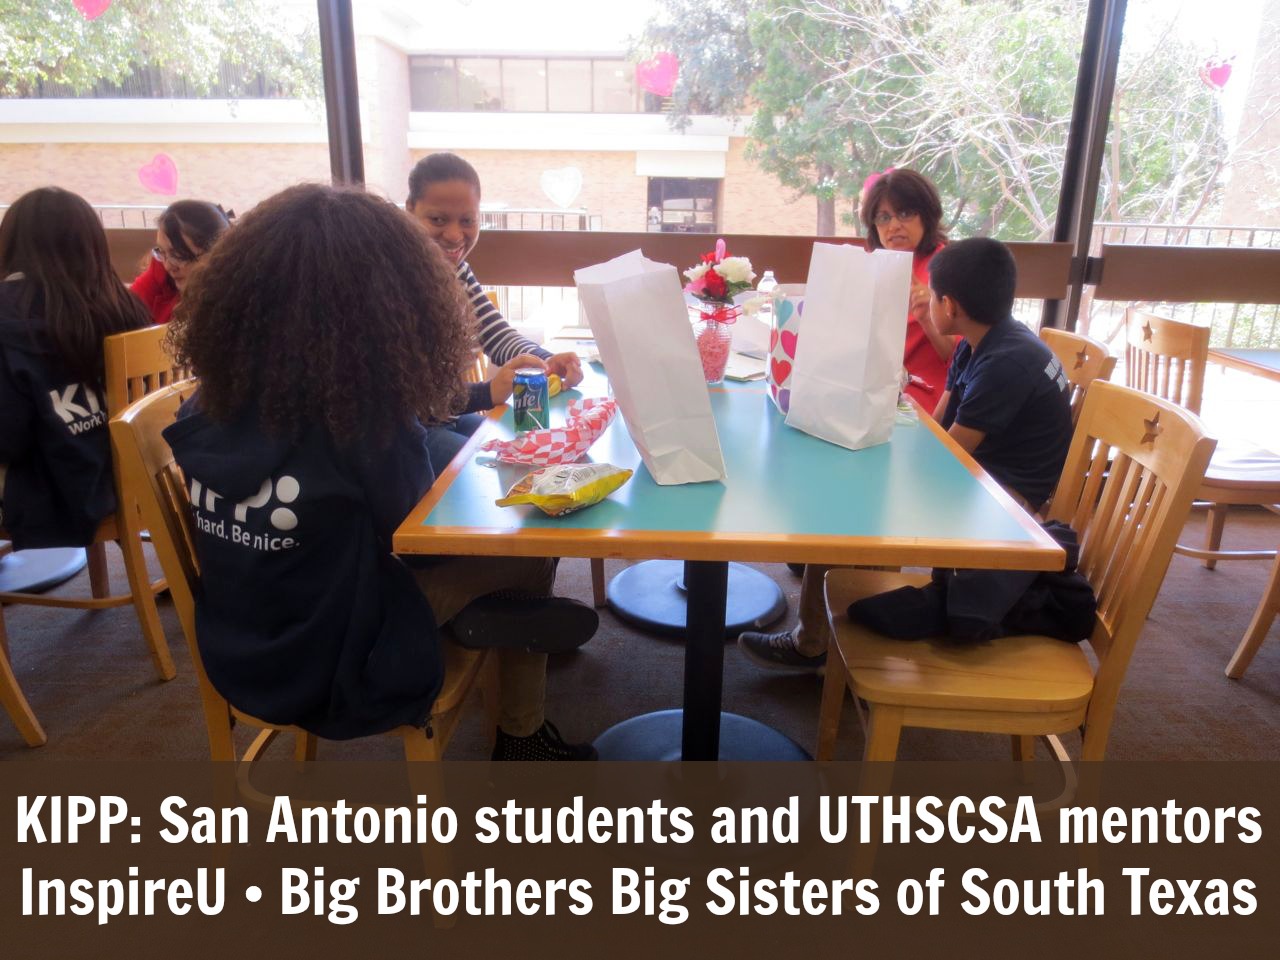 KIPP: San Antonio Students and UTHSCSA mentors meet through InspireU mentorship program at Big Brothers Big Sisters of South Texas | San Antonio Charter Moms